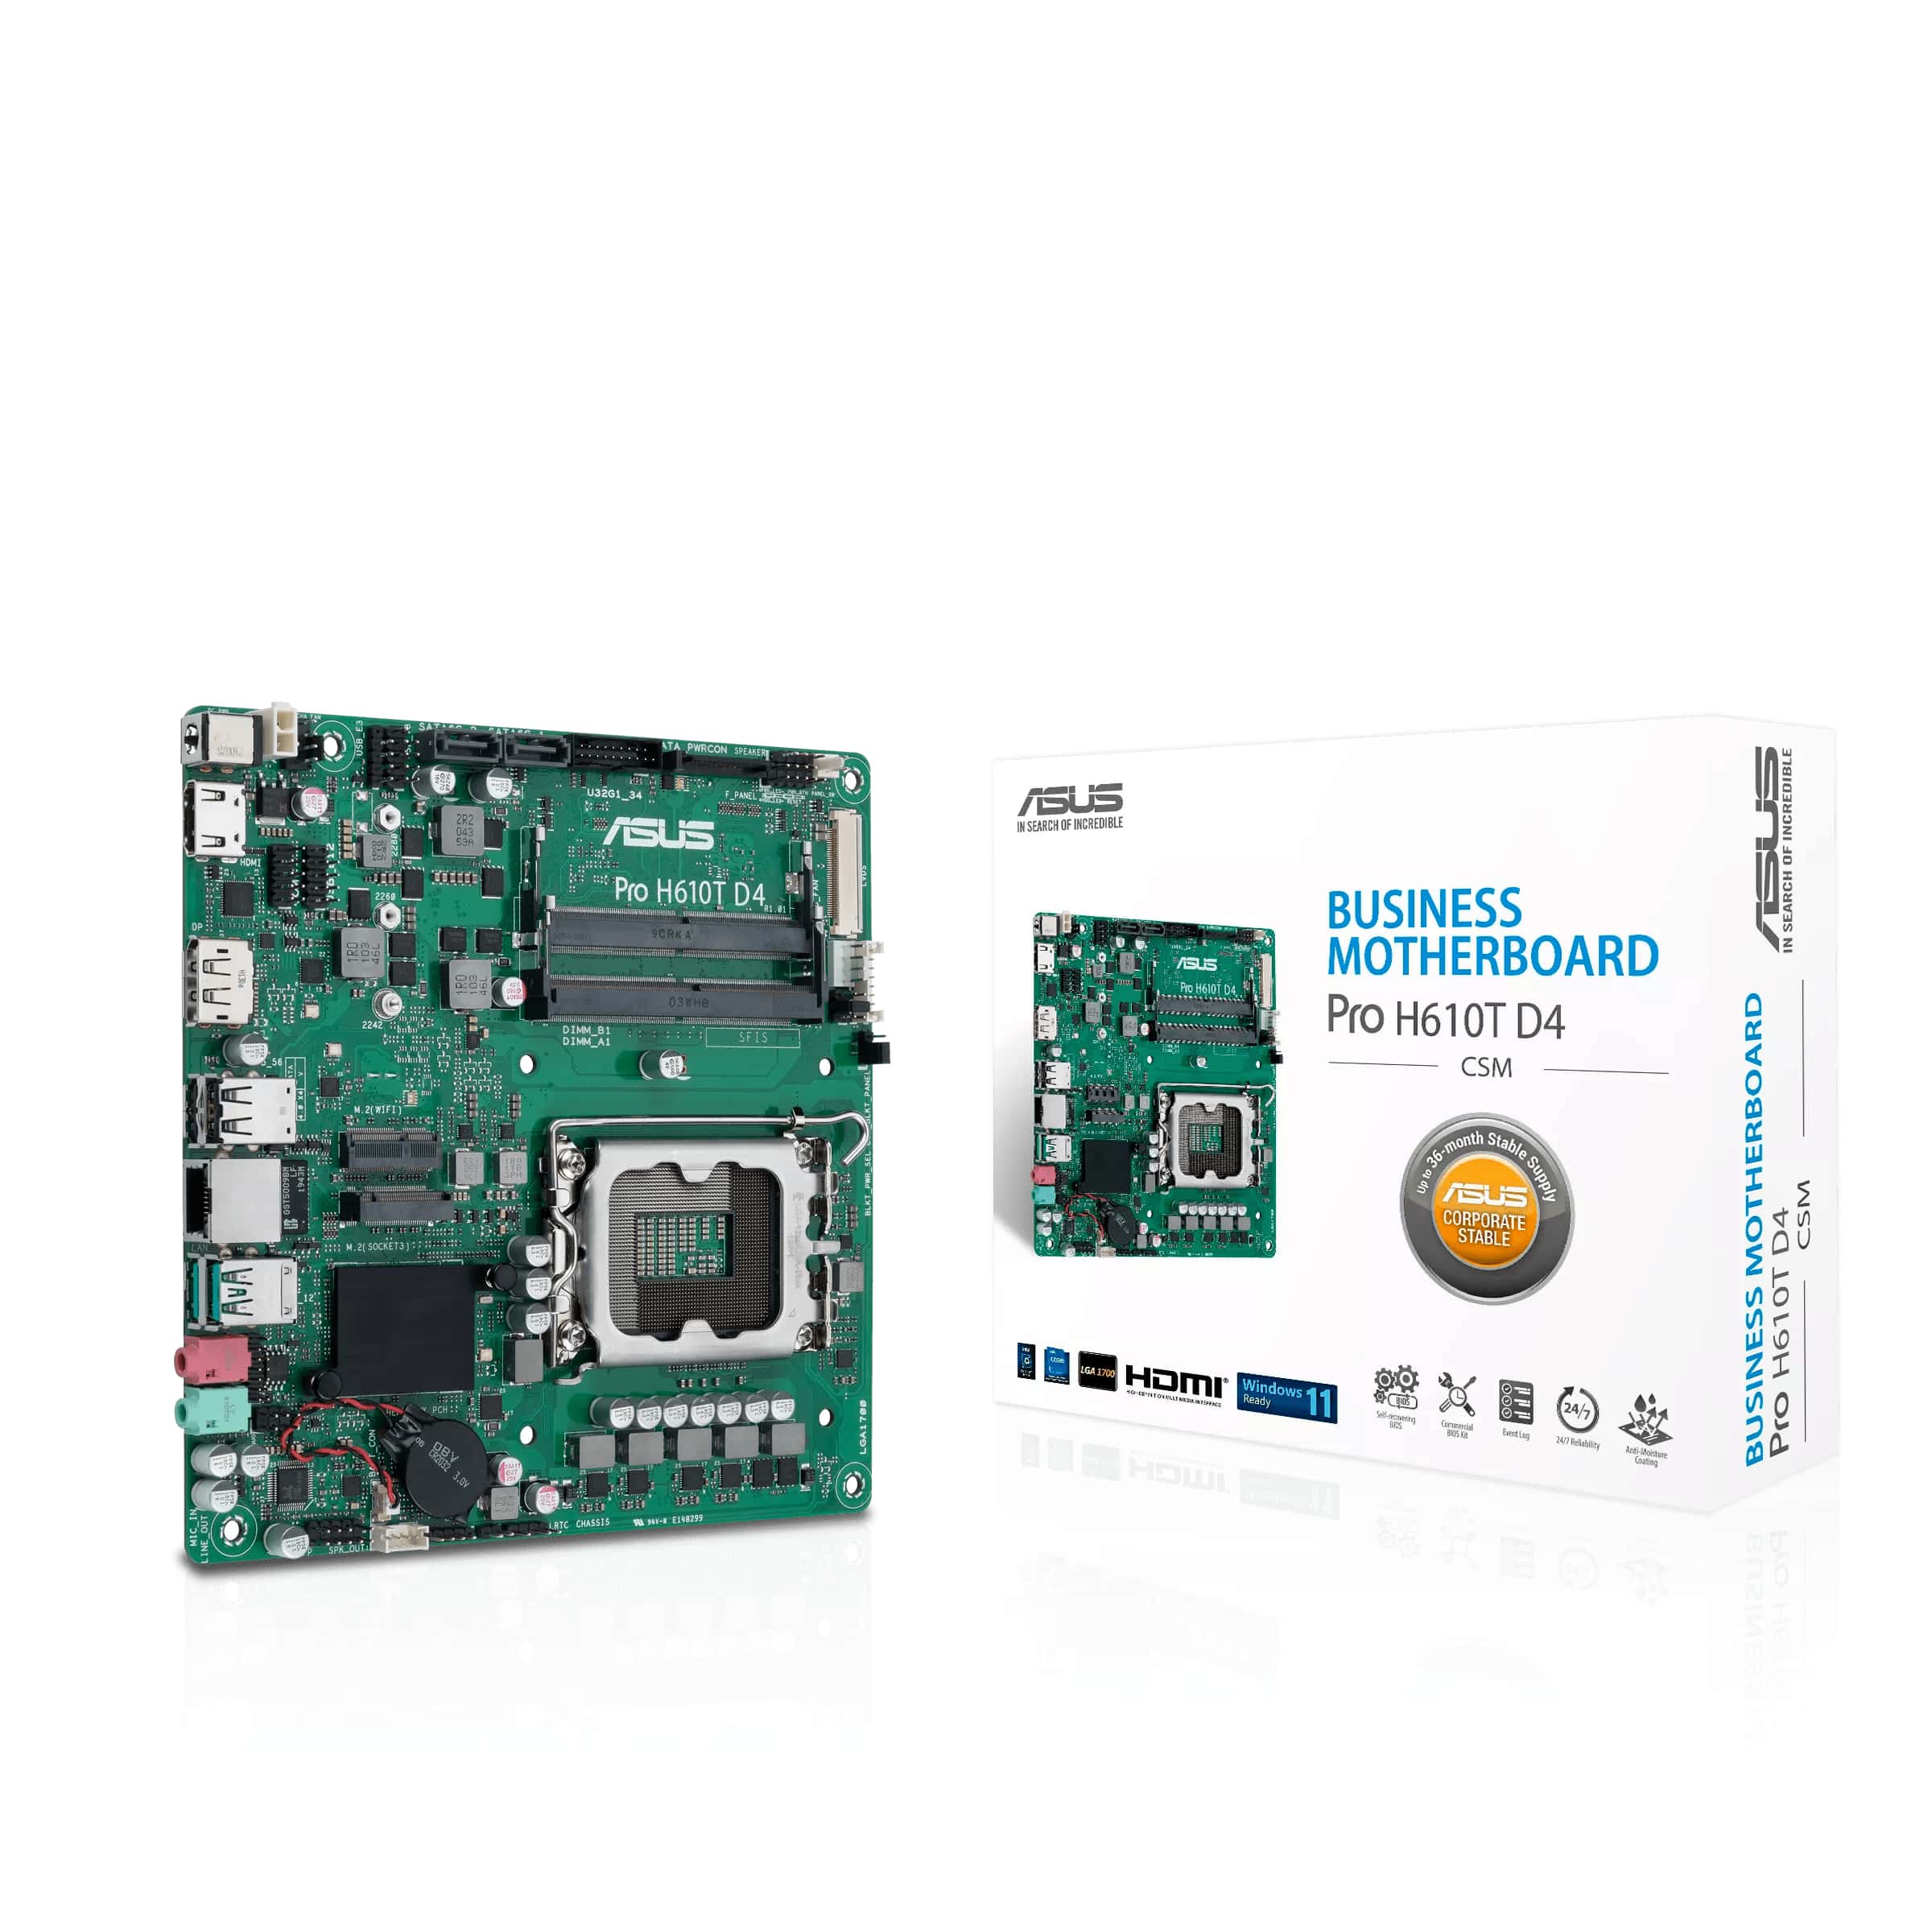 ASUS Motherboard Pro H610T D4-CSM